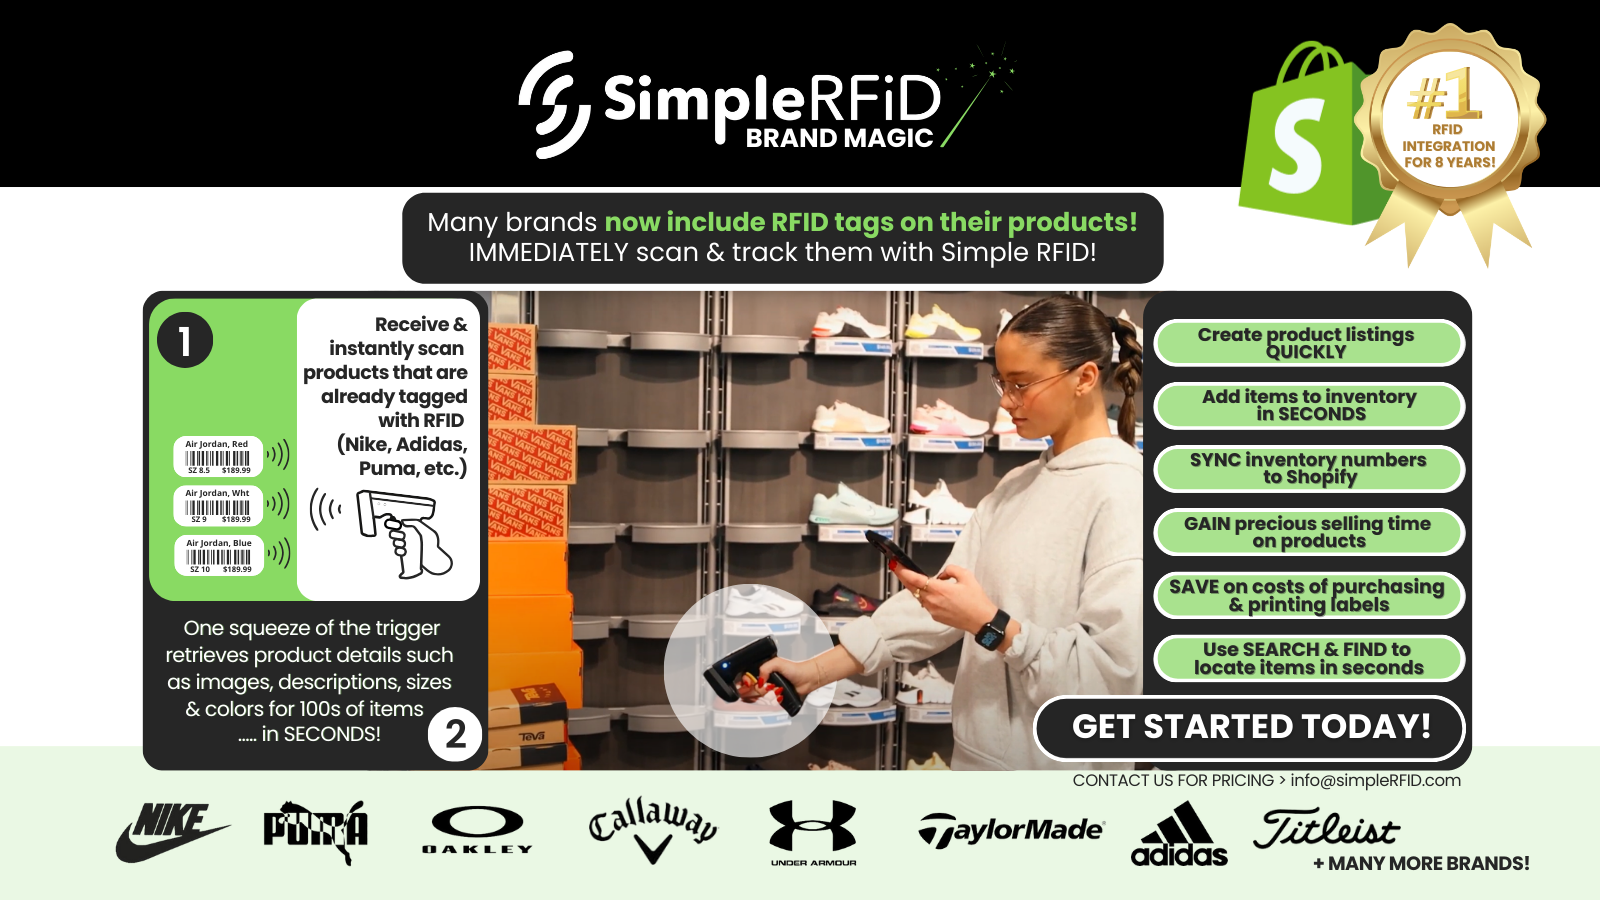 Use RFID BRAND MAGIC to instantly scan/track Nike, Adidas, Puma+